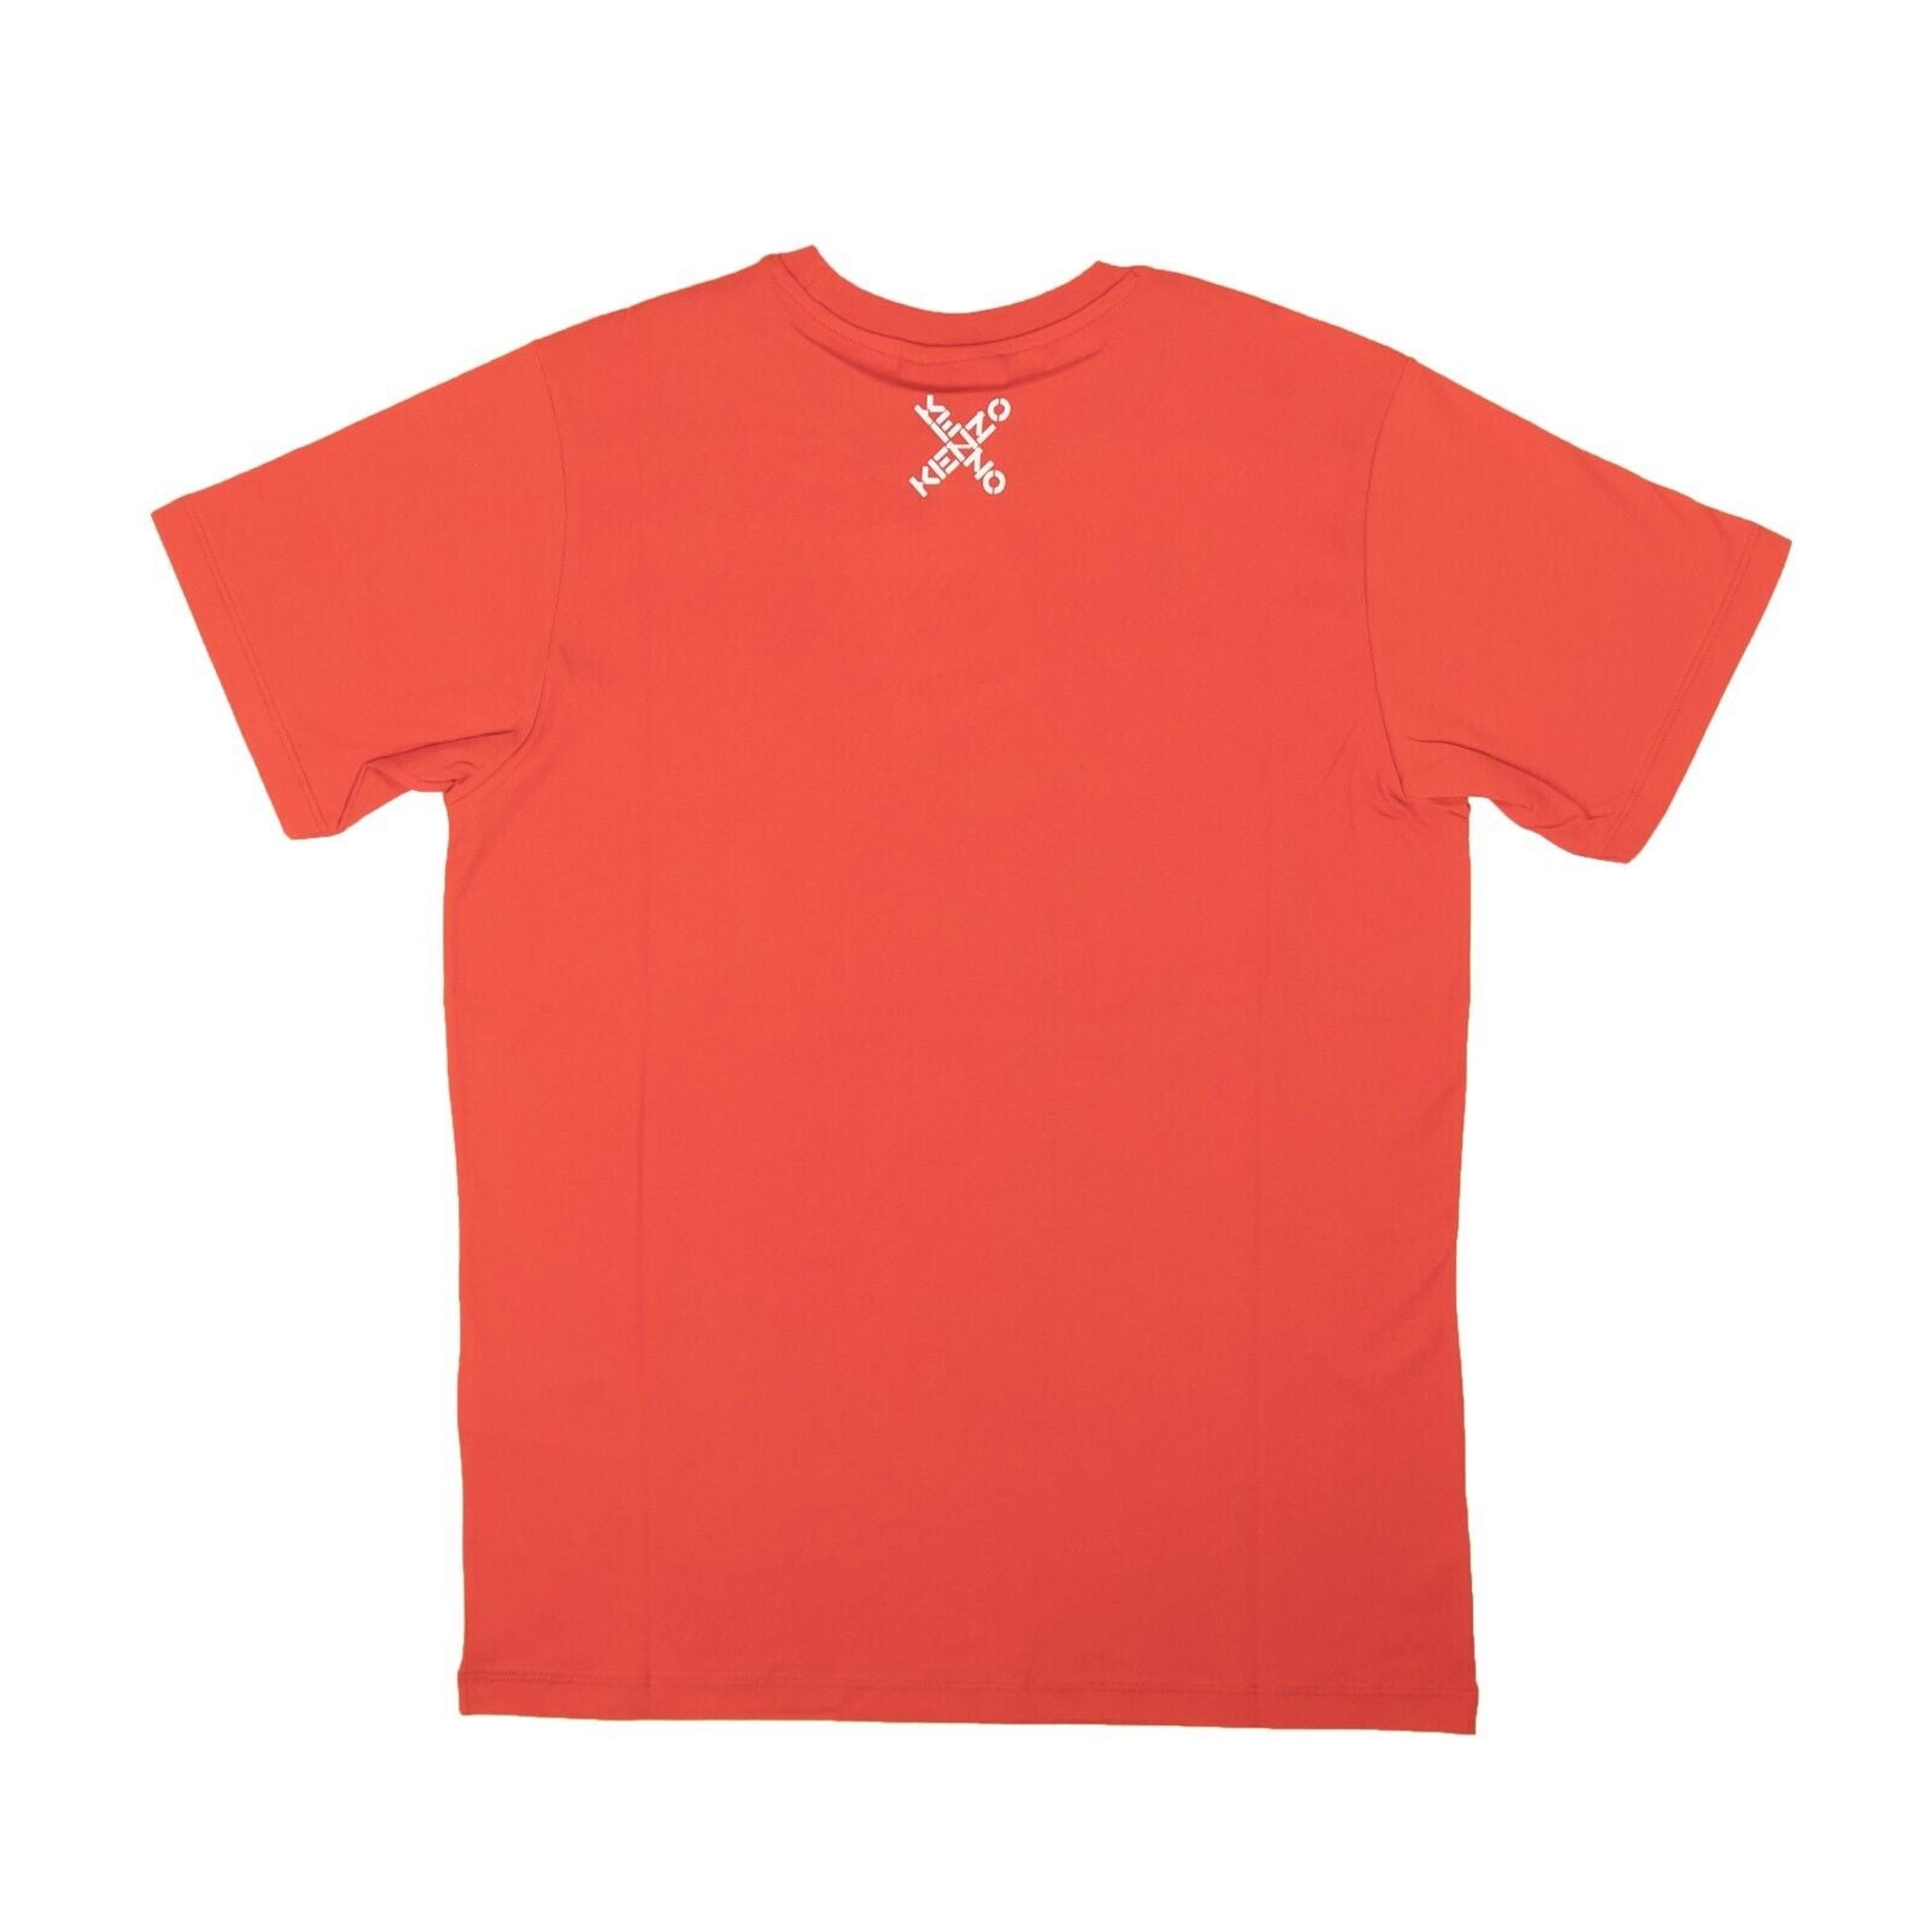 Alternate View 2 of Kenzo Big X T-Shirt - Red